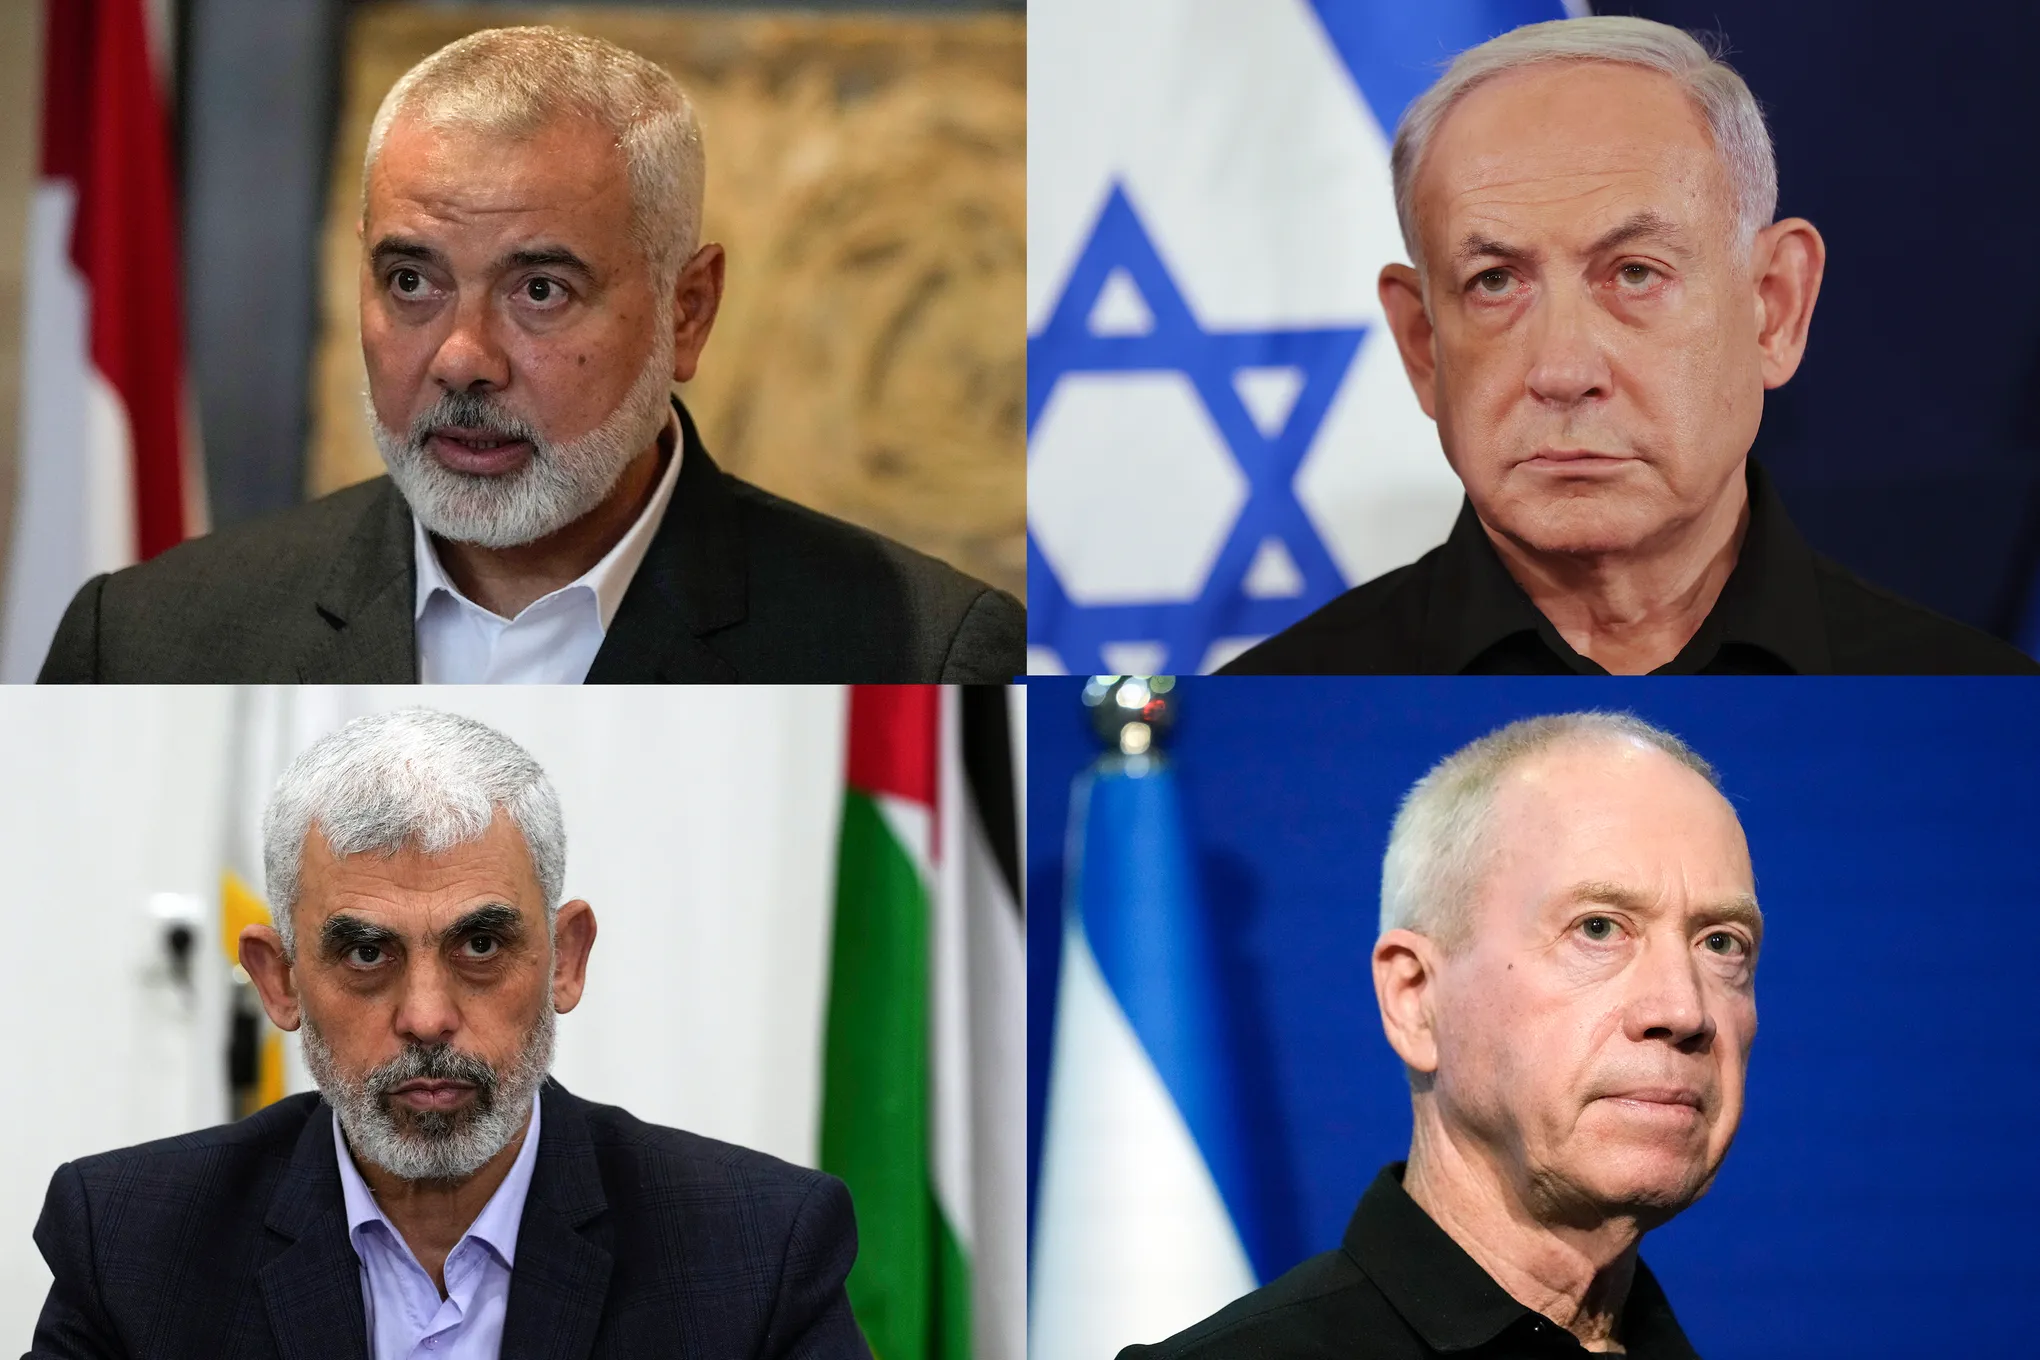 War crimes prosecutor seeks arrest of Israeli and Hamas leaders, including Netanyahu